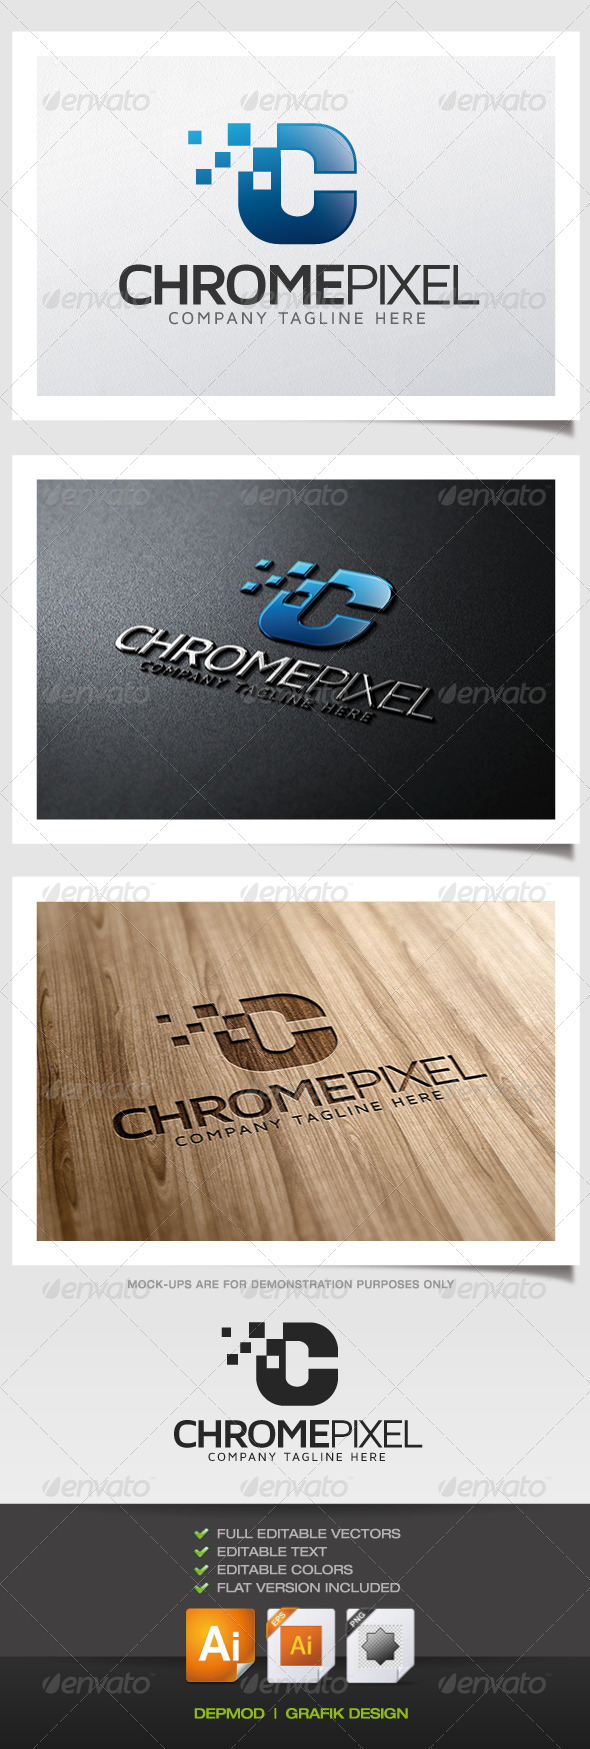 Chrome Pixel Logo